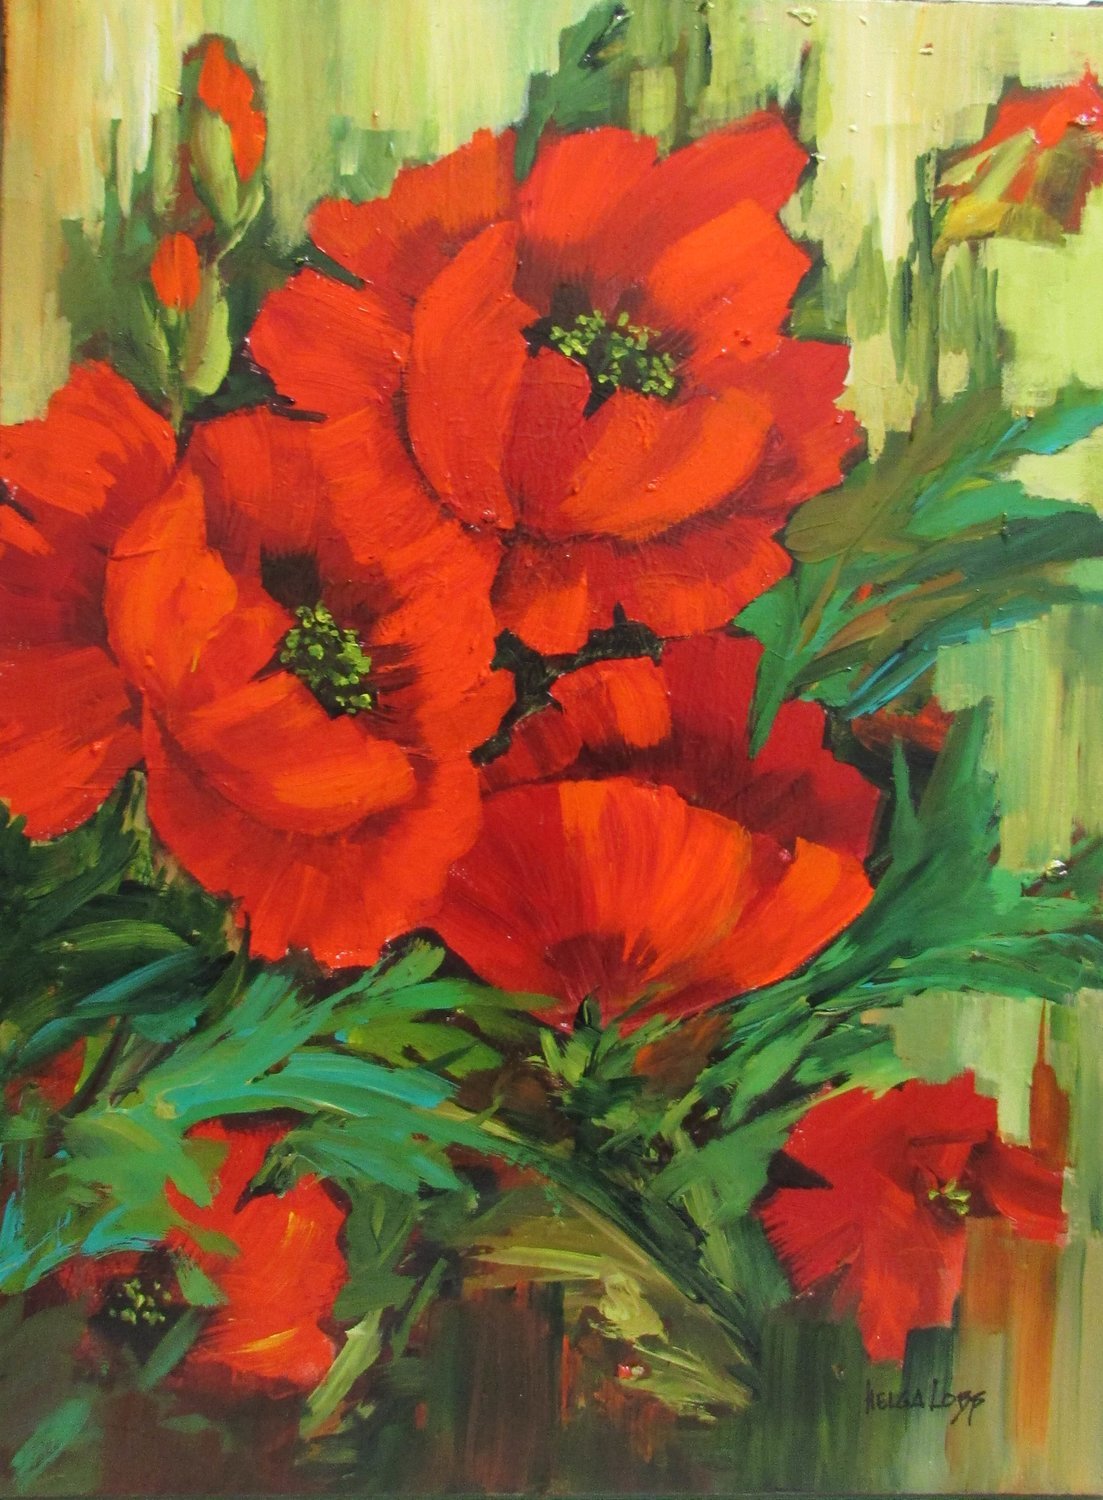 From My Garden Series II, acrylic on canvas, 18x24